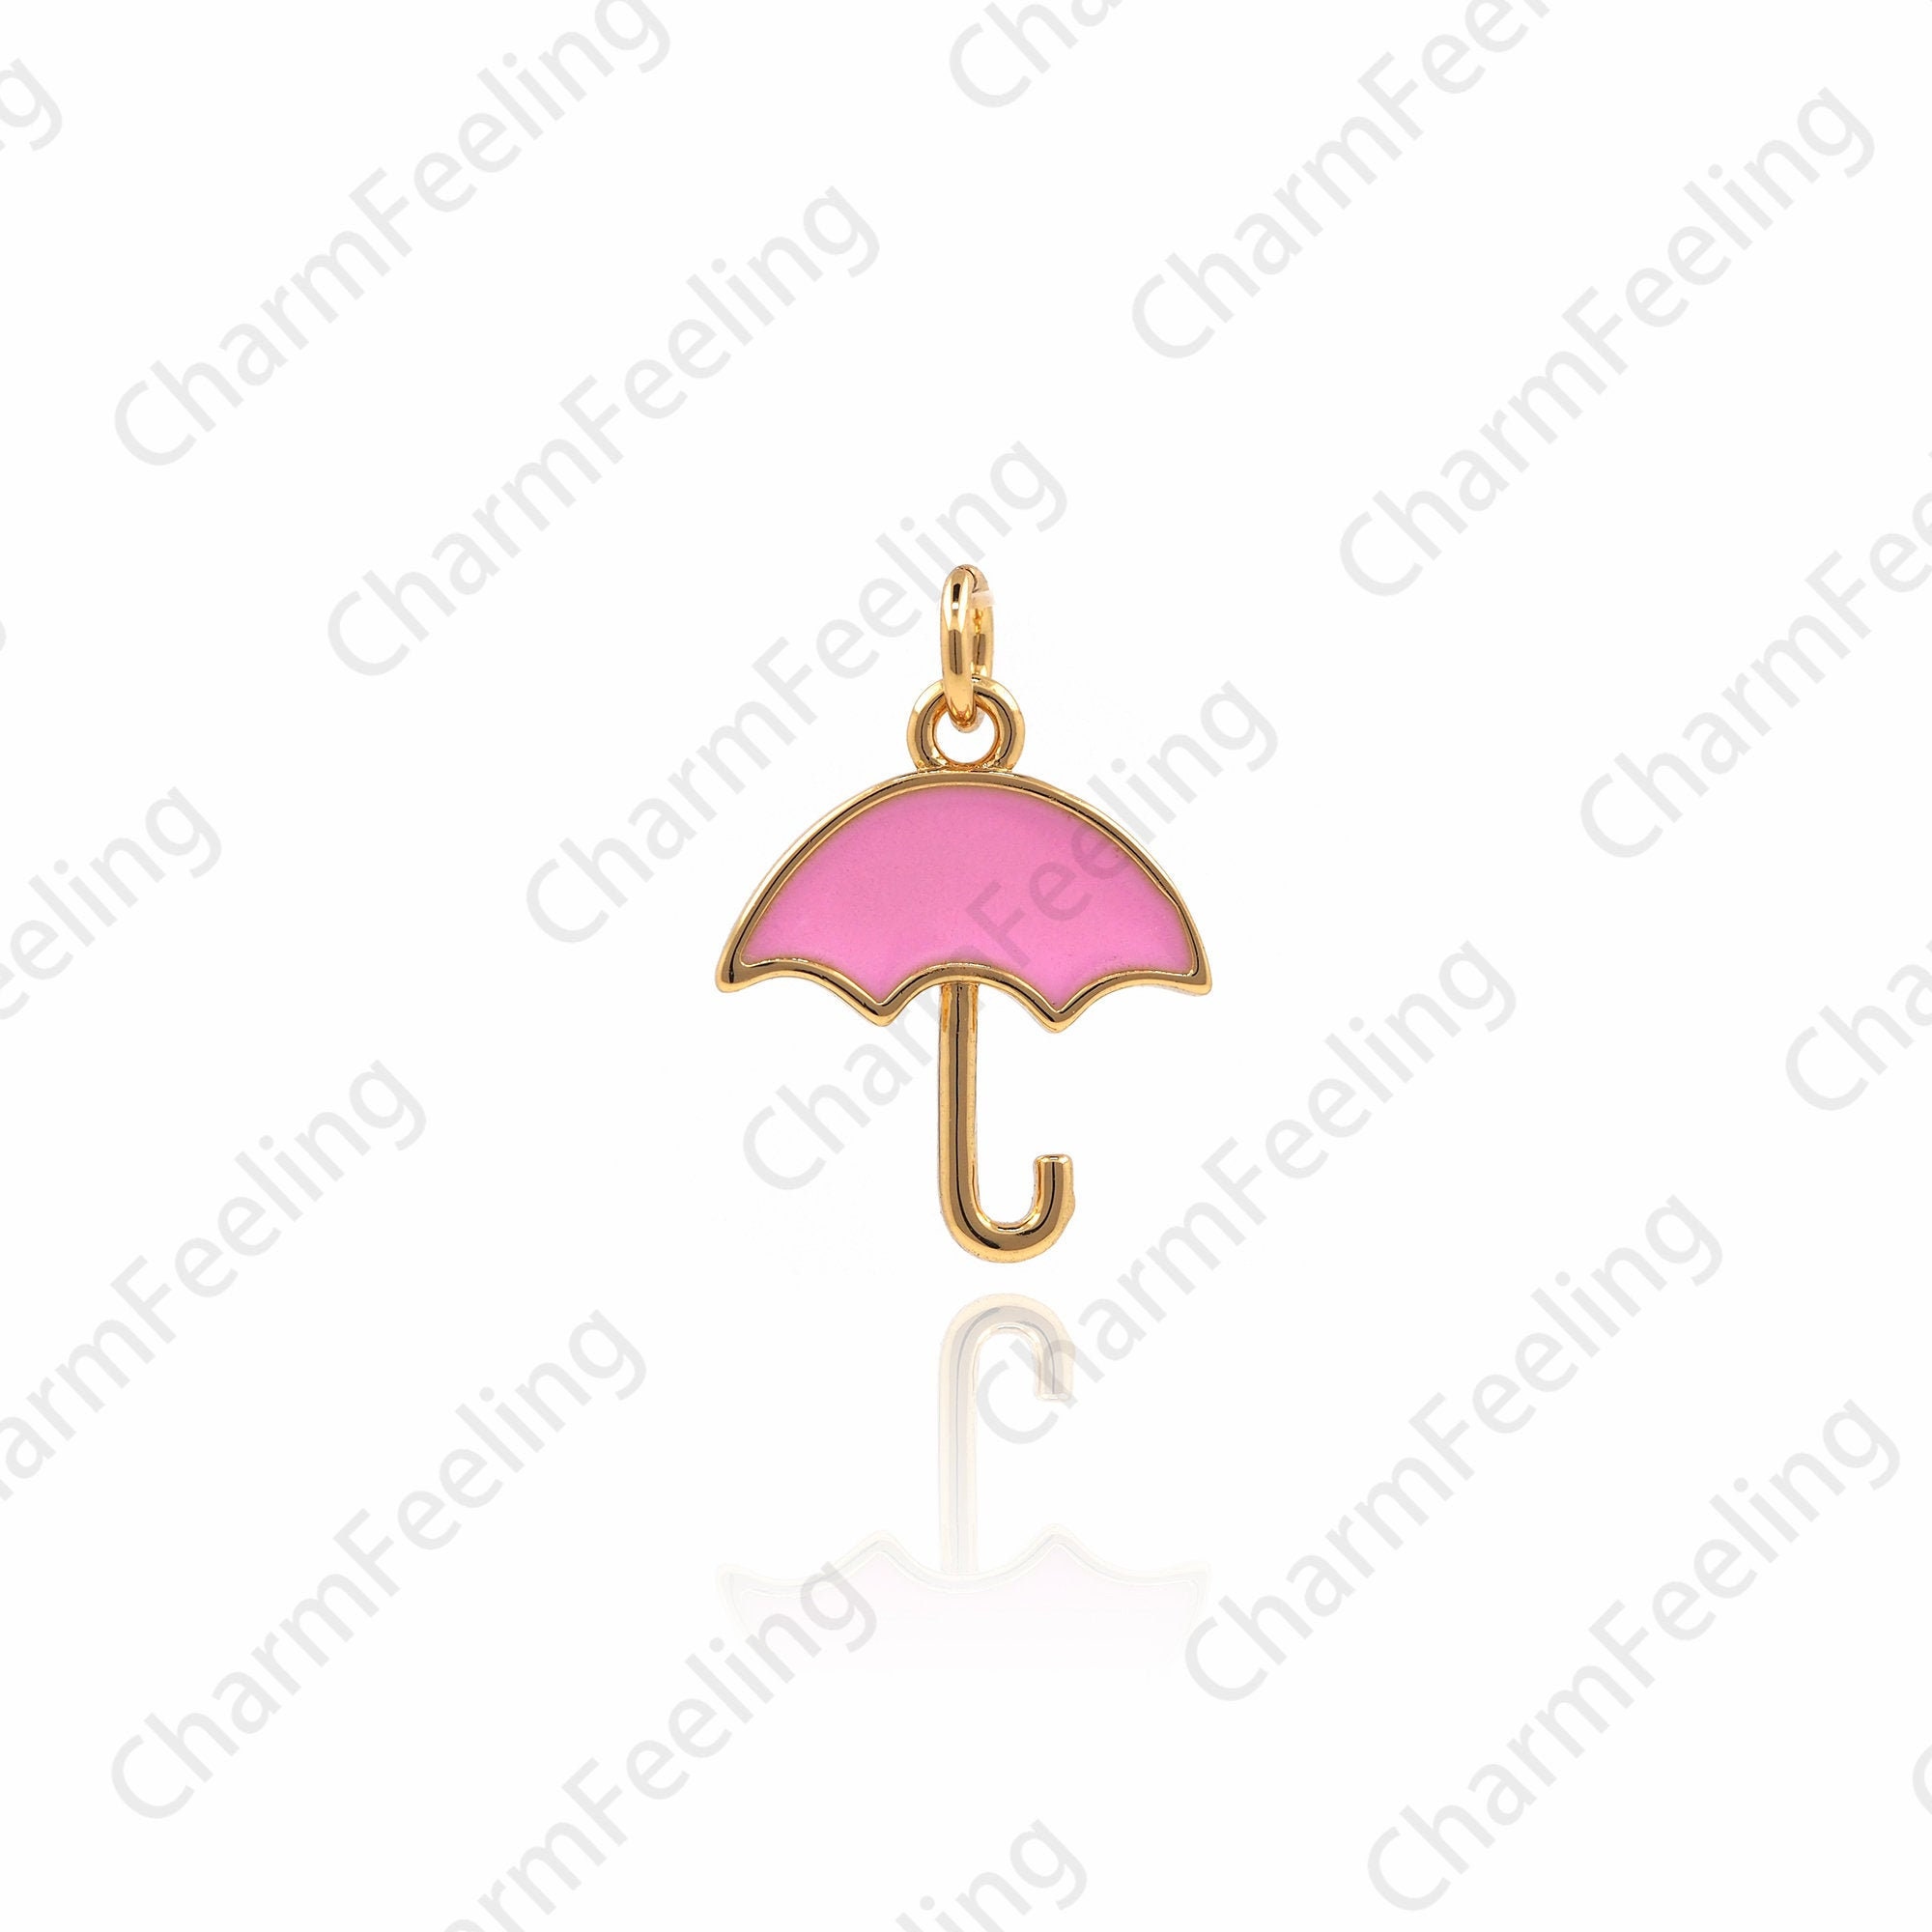 Enamel Umbrella Pendant, 18K Gold Filled Necklace, Charm, 17x12x1.5mm